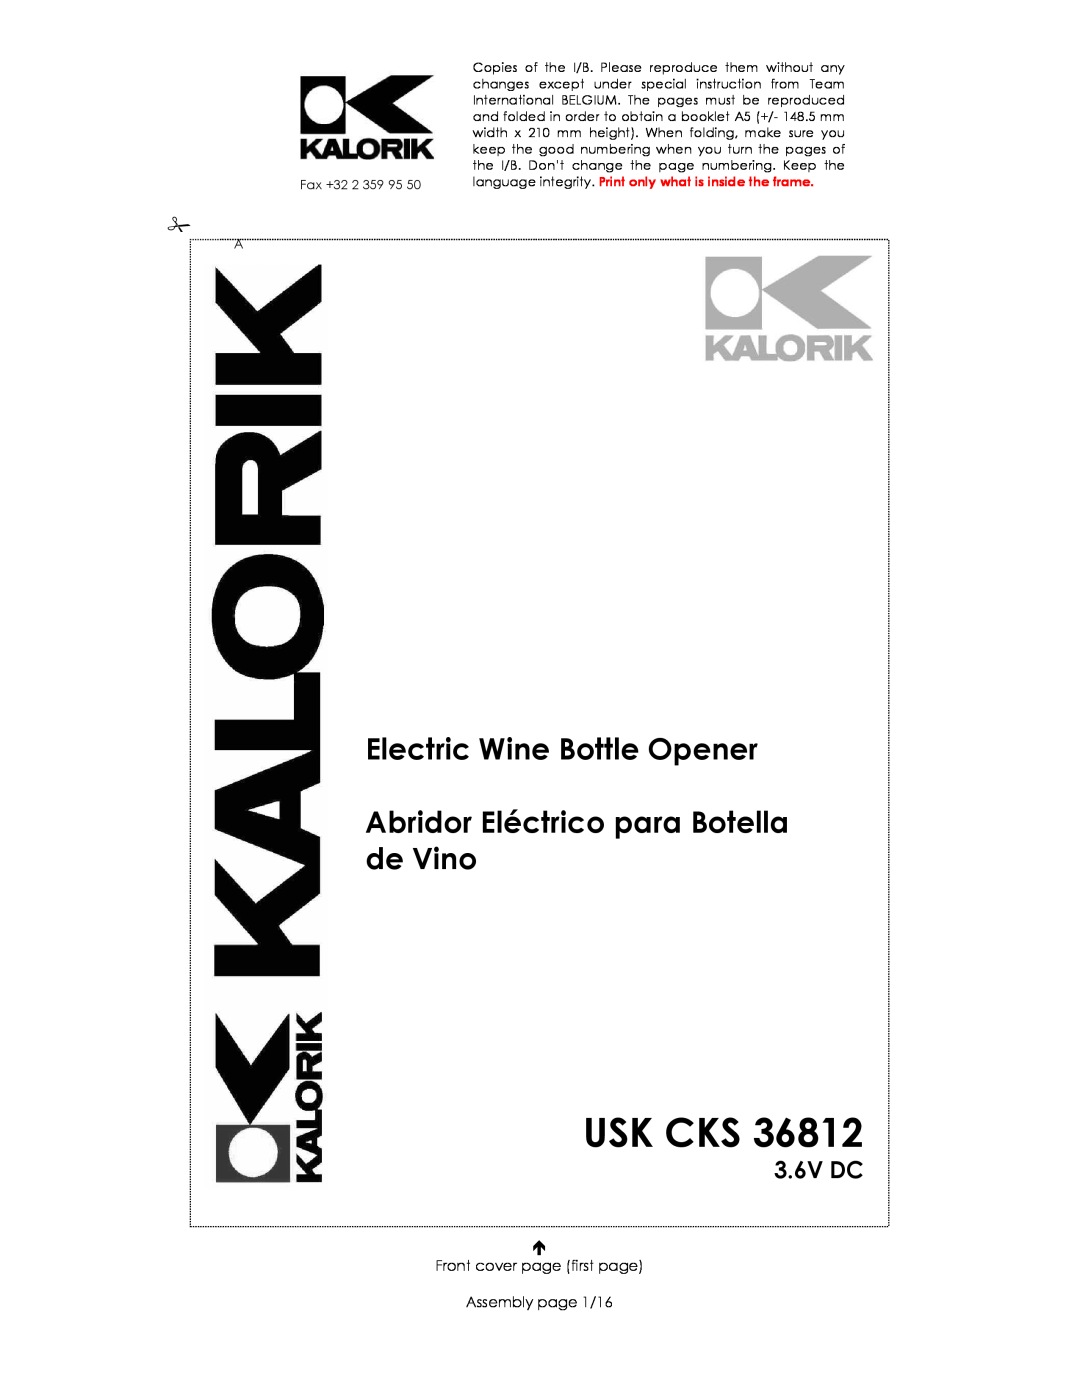 Kalorik USK CKS 36812 manual Usk Cks, 3.6V DC, Electric Wine Bottle Opener Abridor Eléctrico para Botella de Vino 